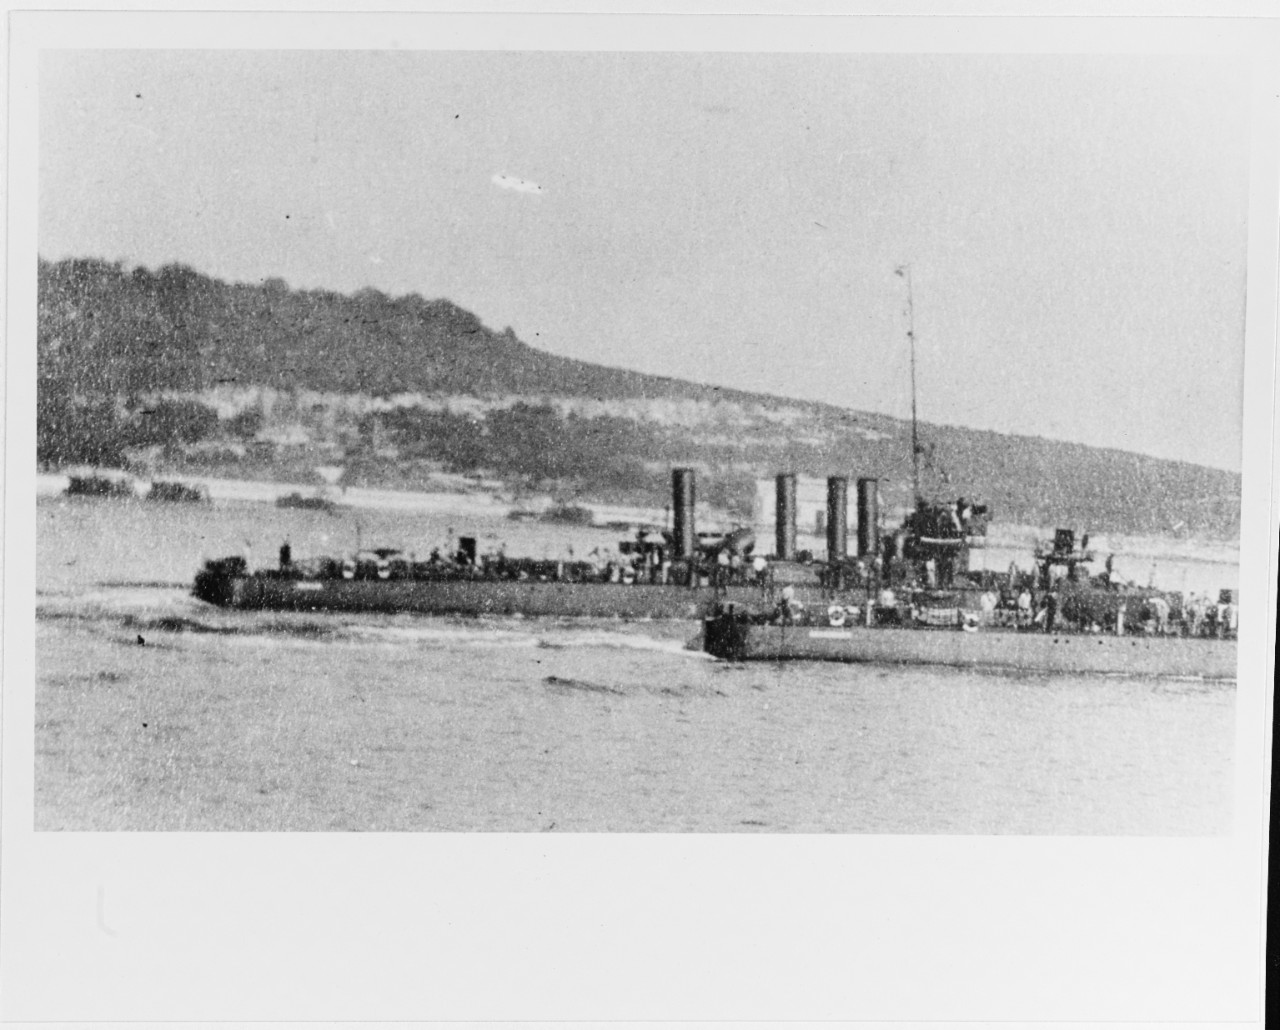 HUSZAR (Austrian Destroyer, 1905-1920)